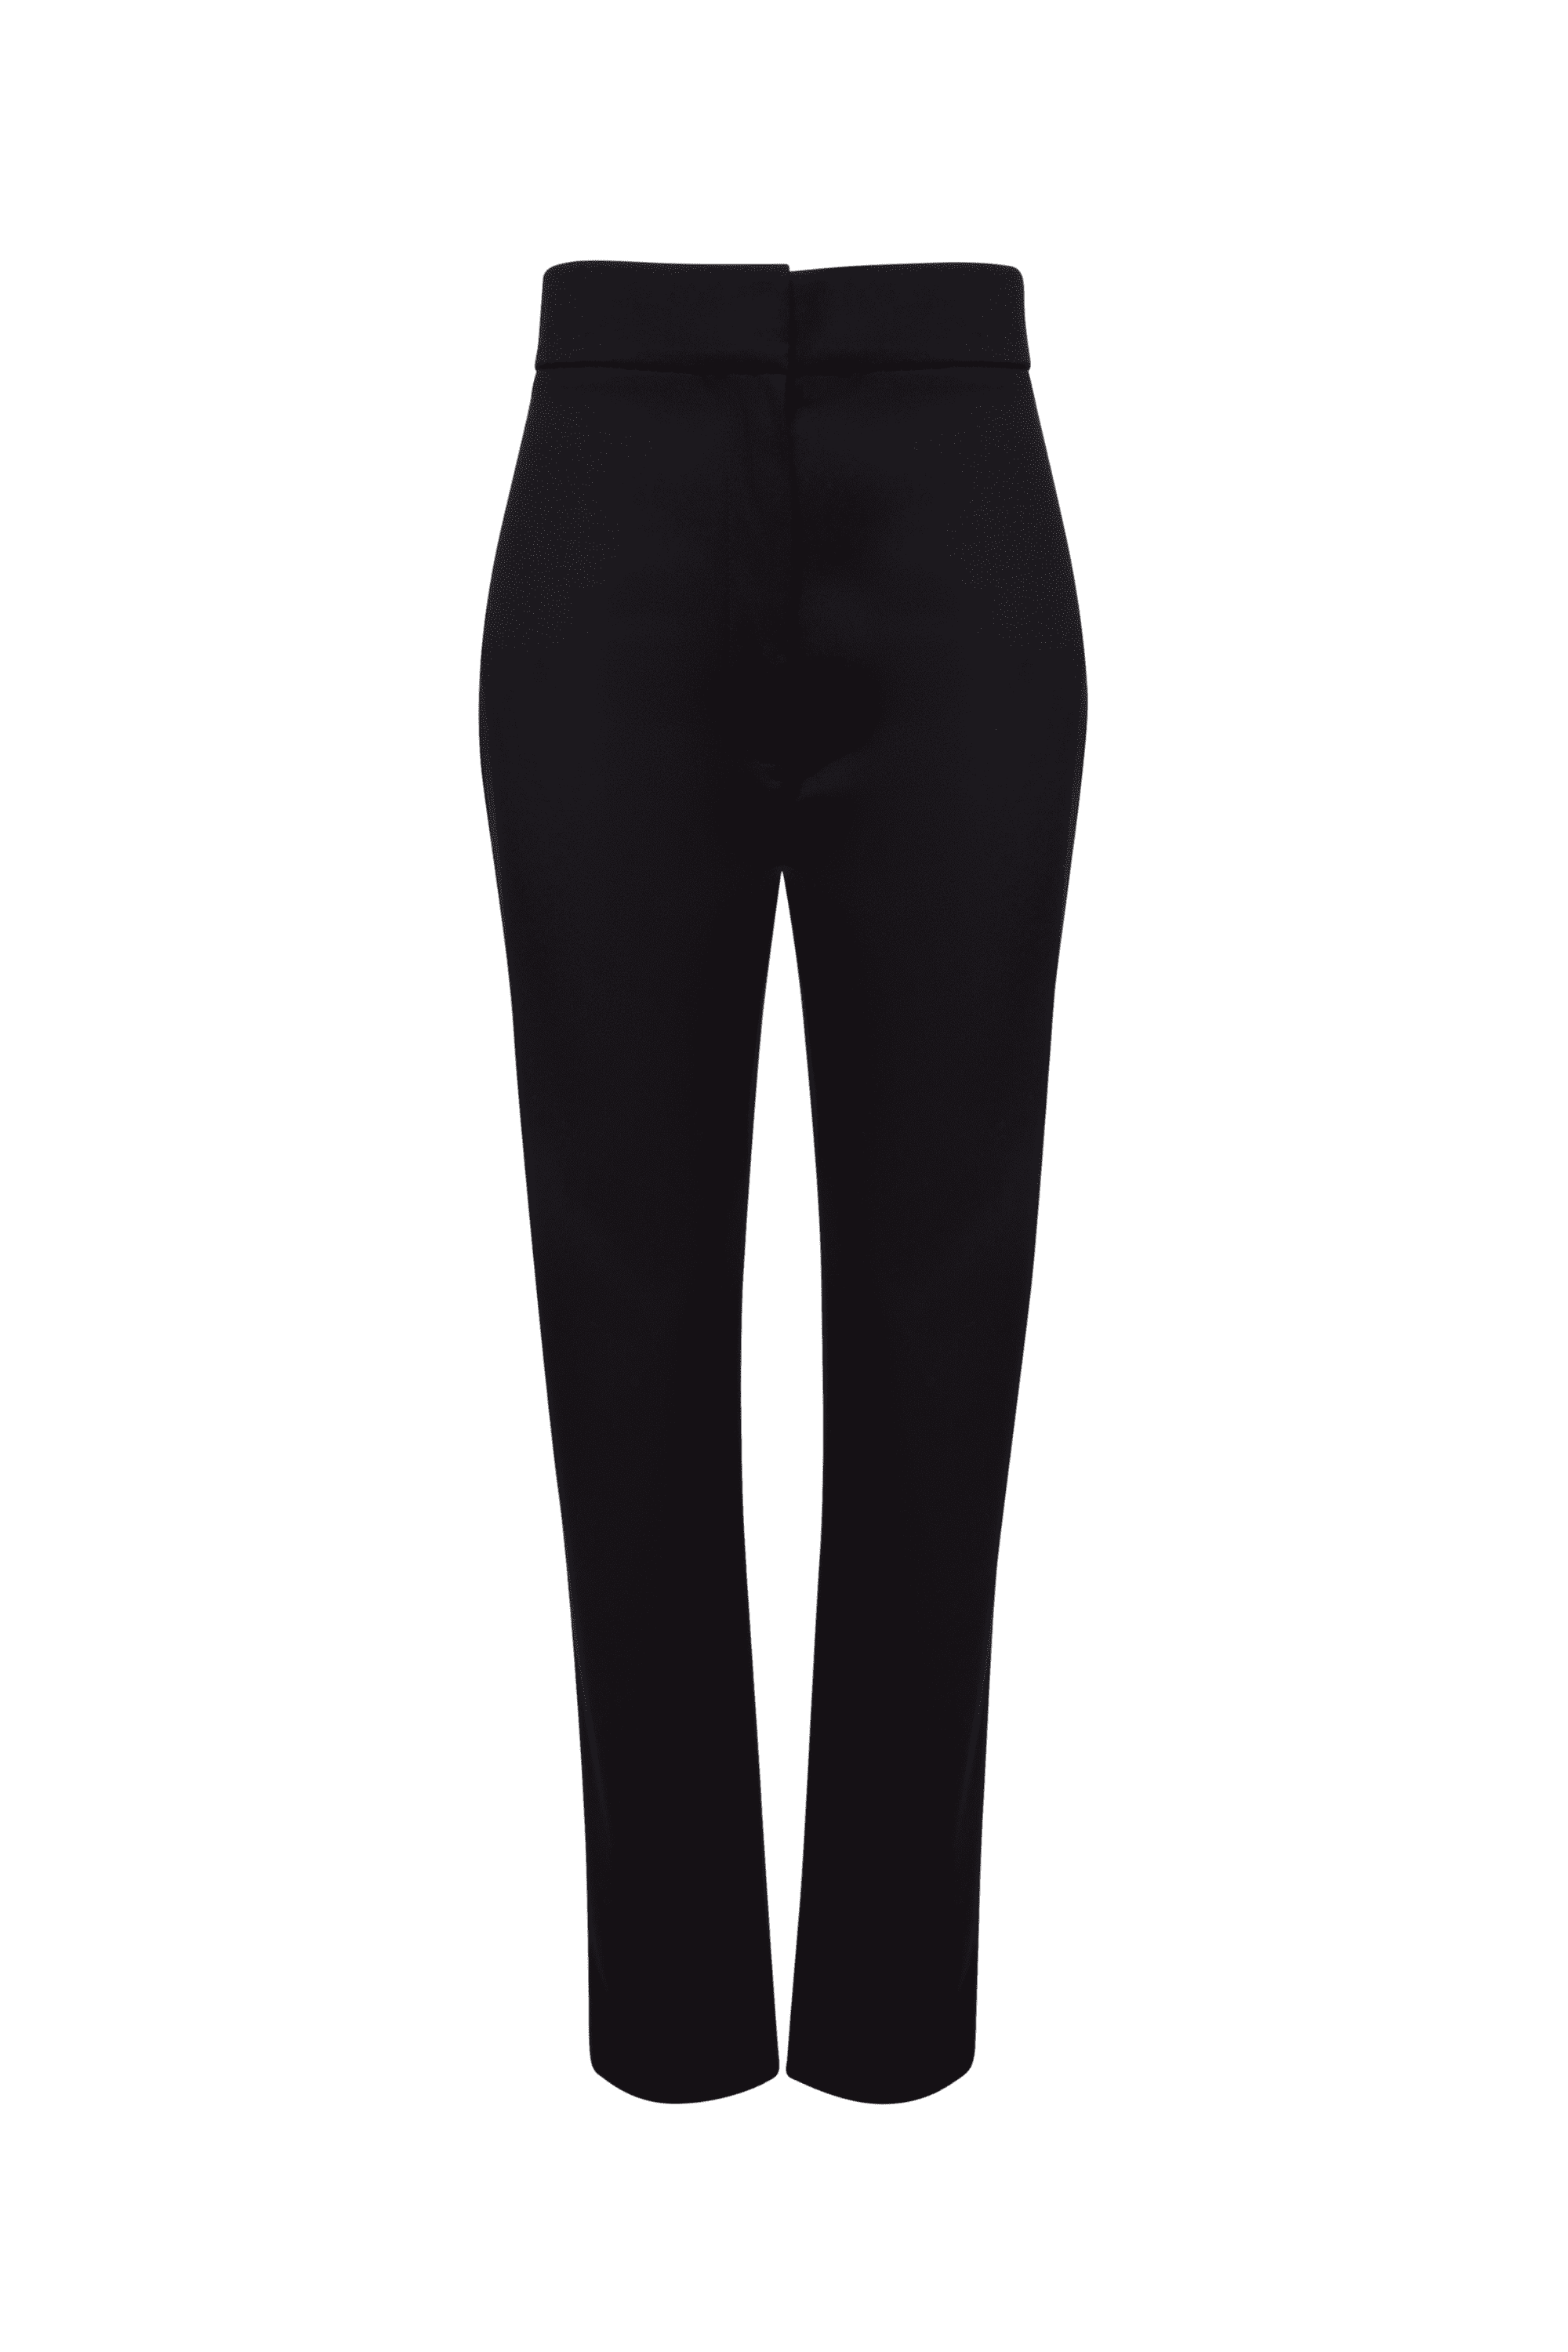 Pantalon Empowerment noir